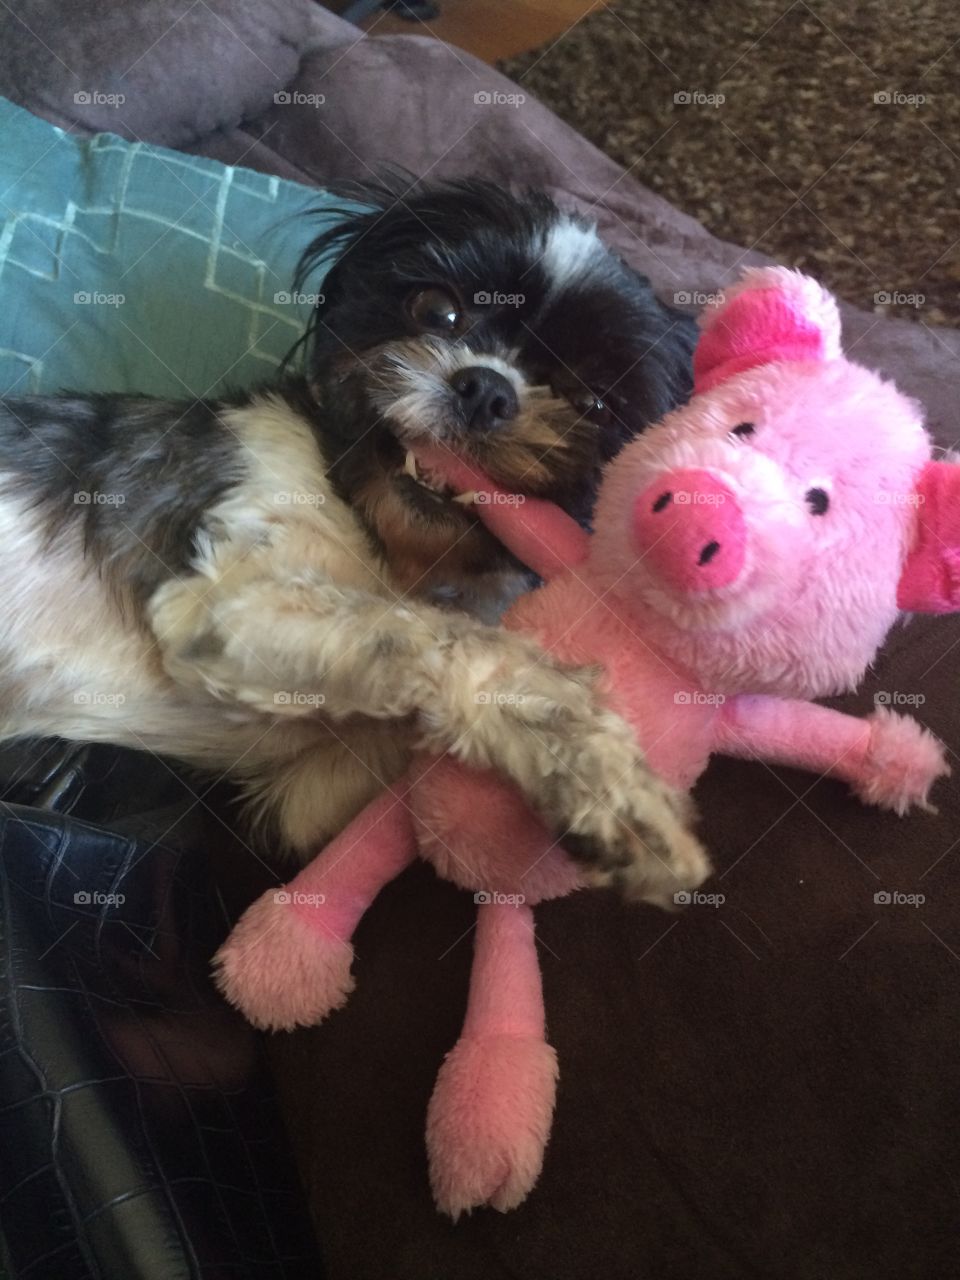 Savannah getting revenge on her toy piggy 